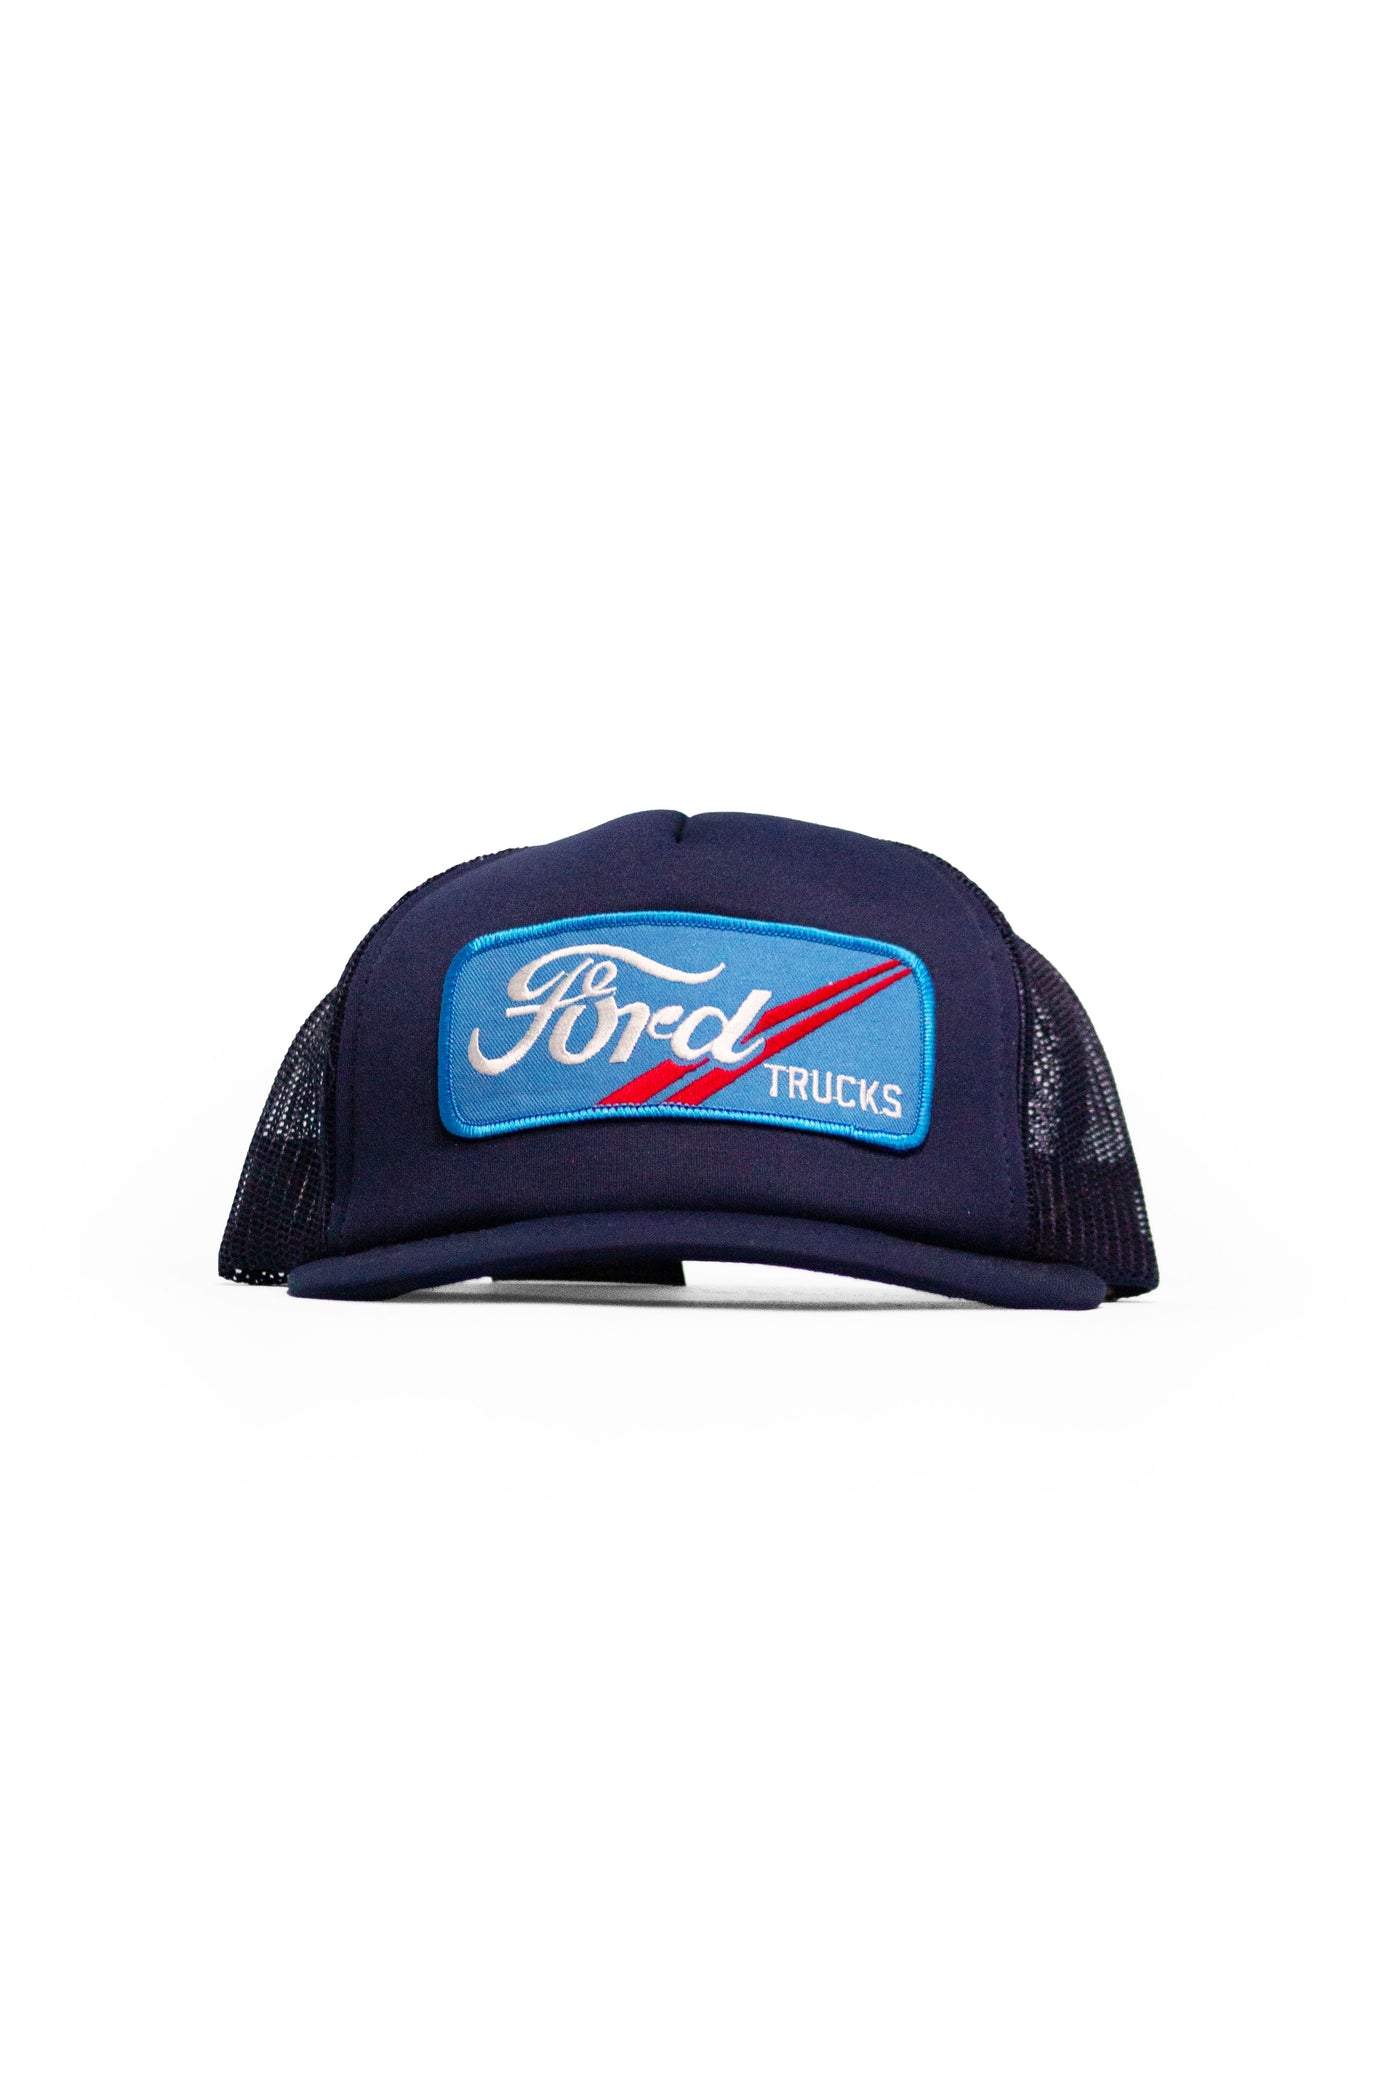 Vintage Ford Trucks Trucker Hat